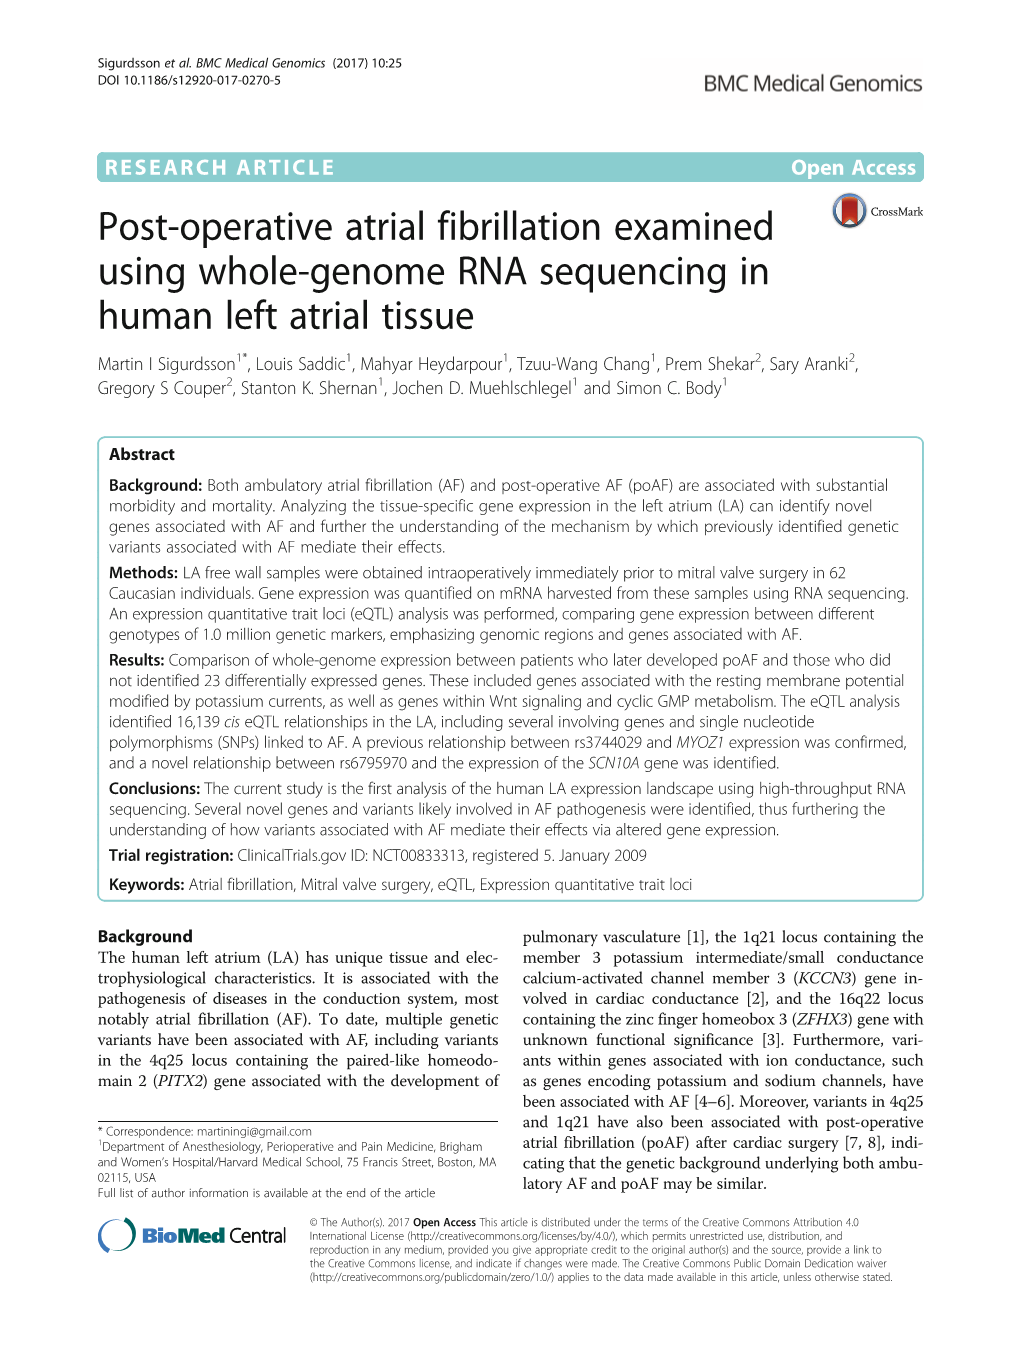 Post-Operative Atrial Fibrillation Examined Using Whole-Genome